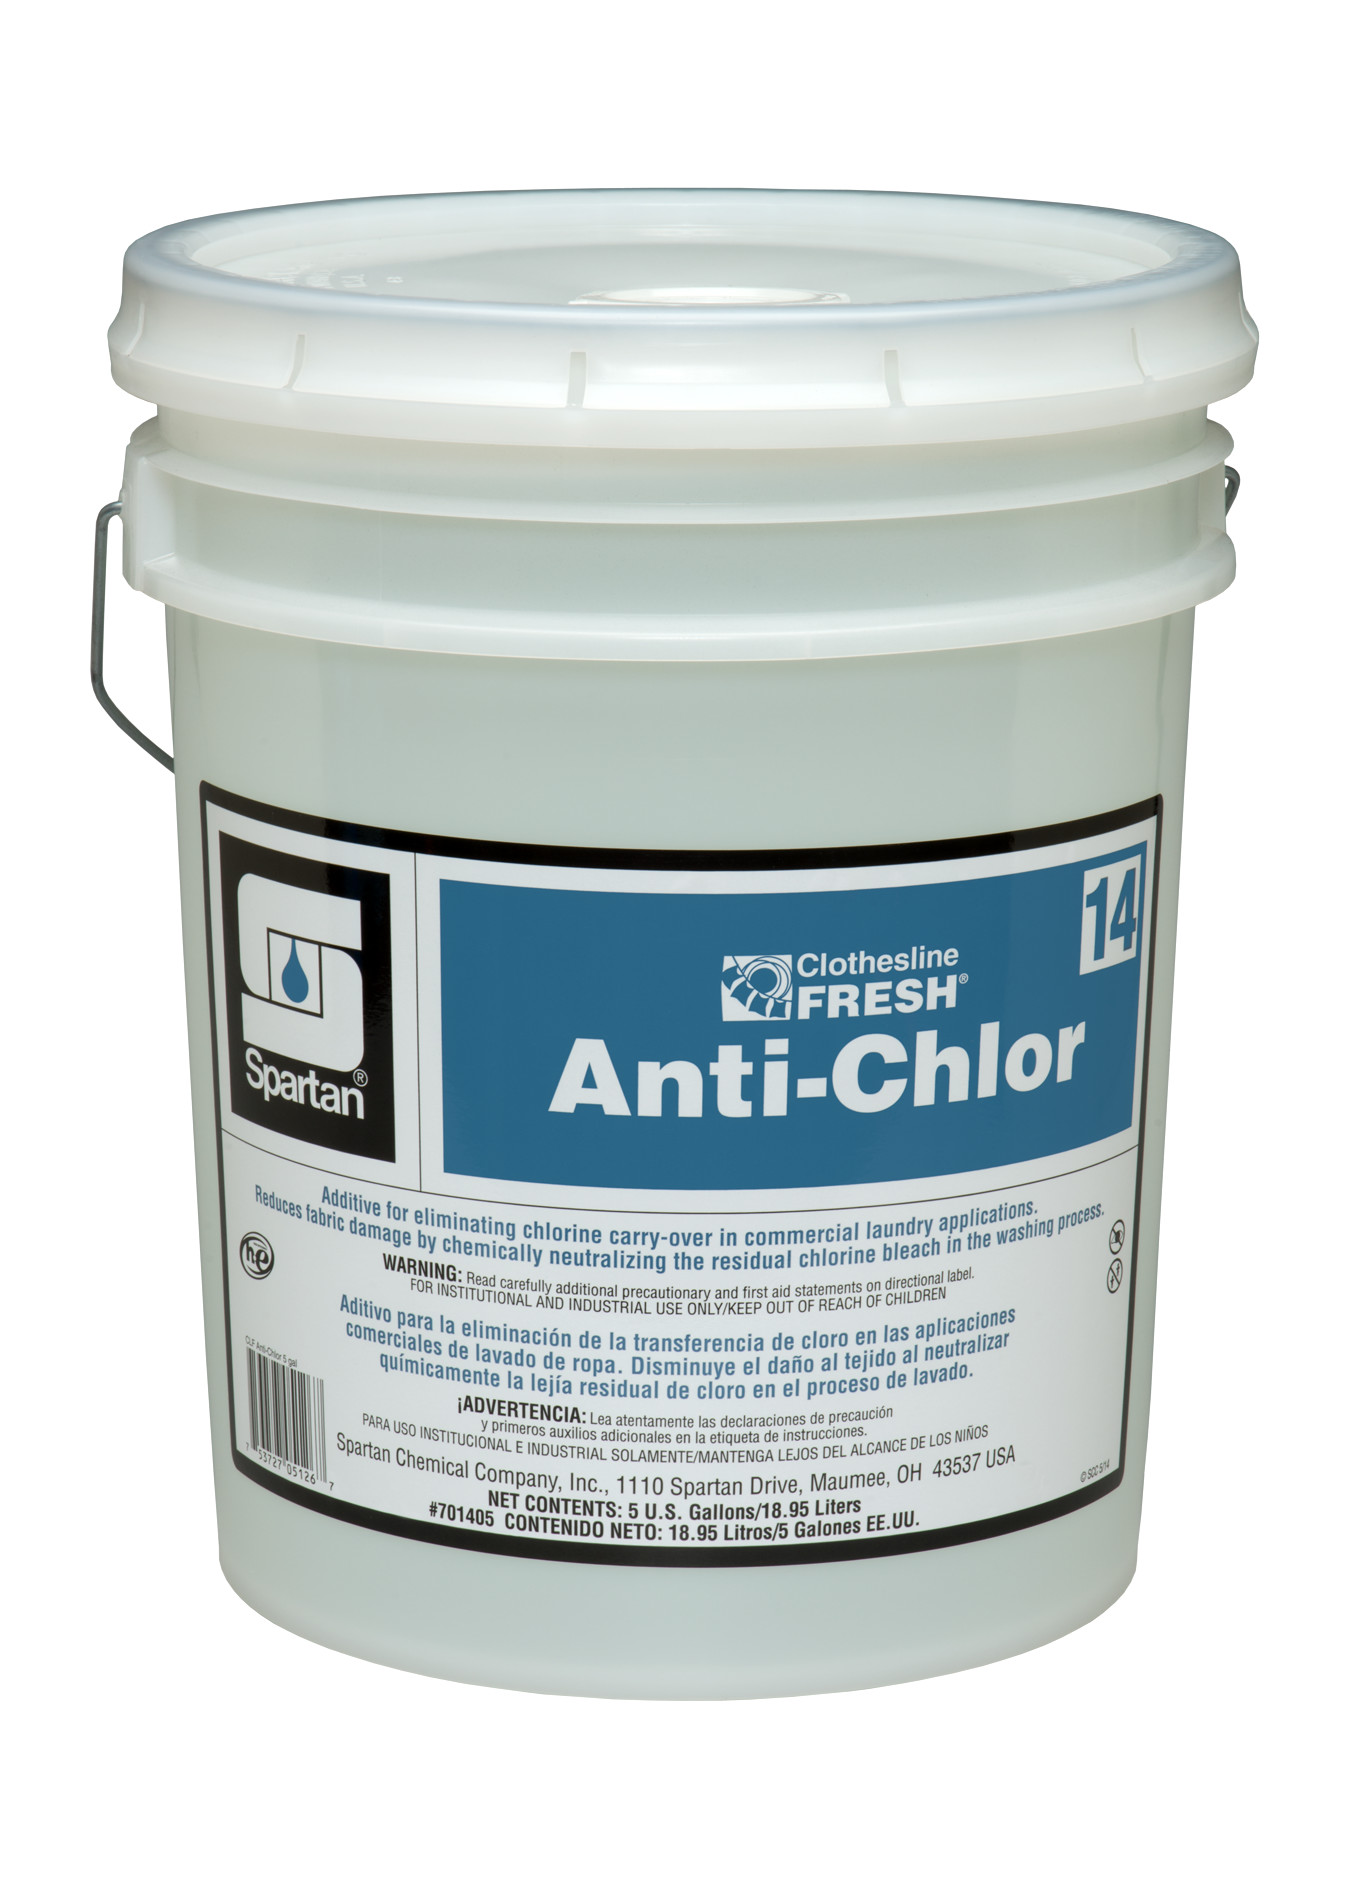 Spartan Chemical Company Clothesline Fresh Anti-Chlor 14, 5 GAL PAIL